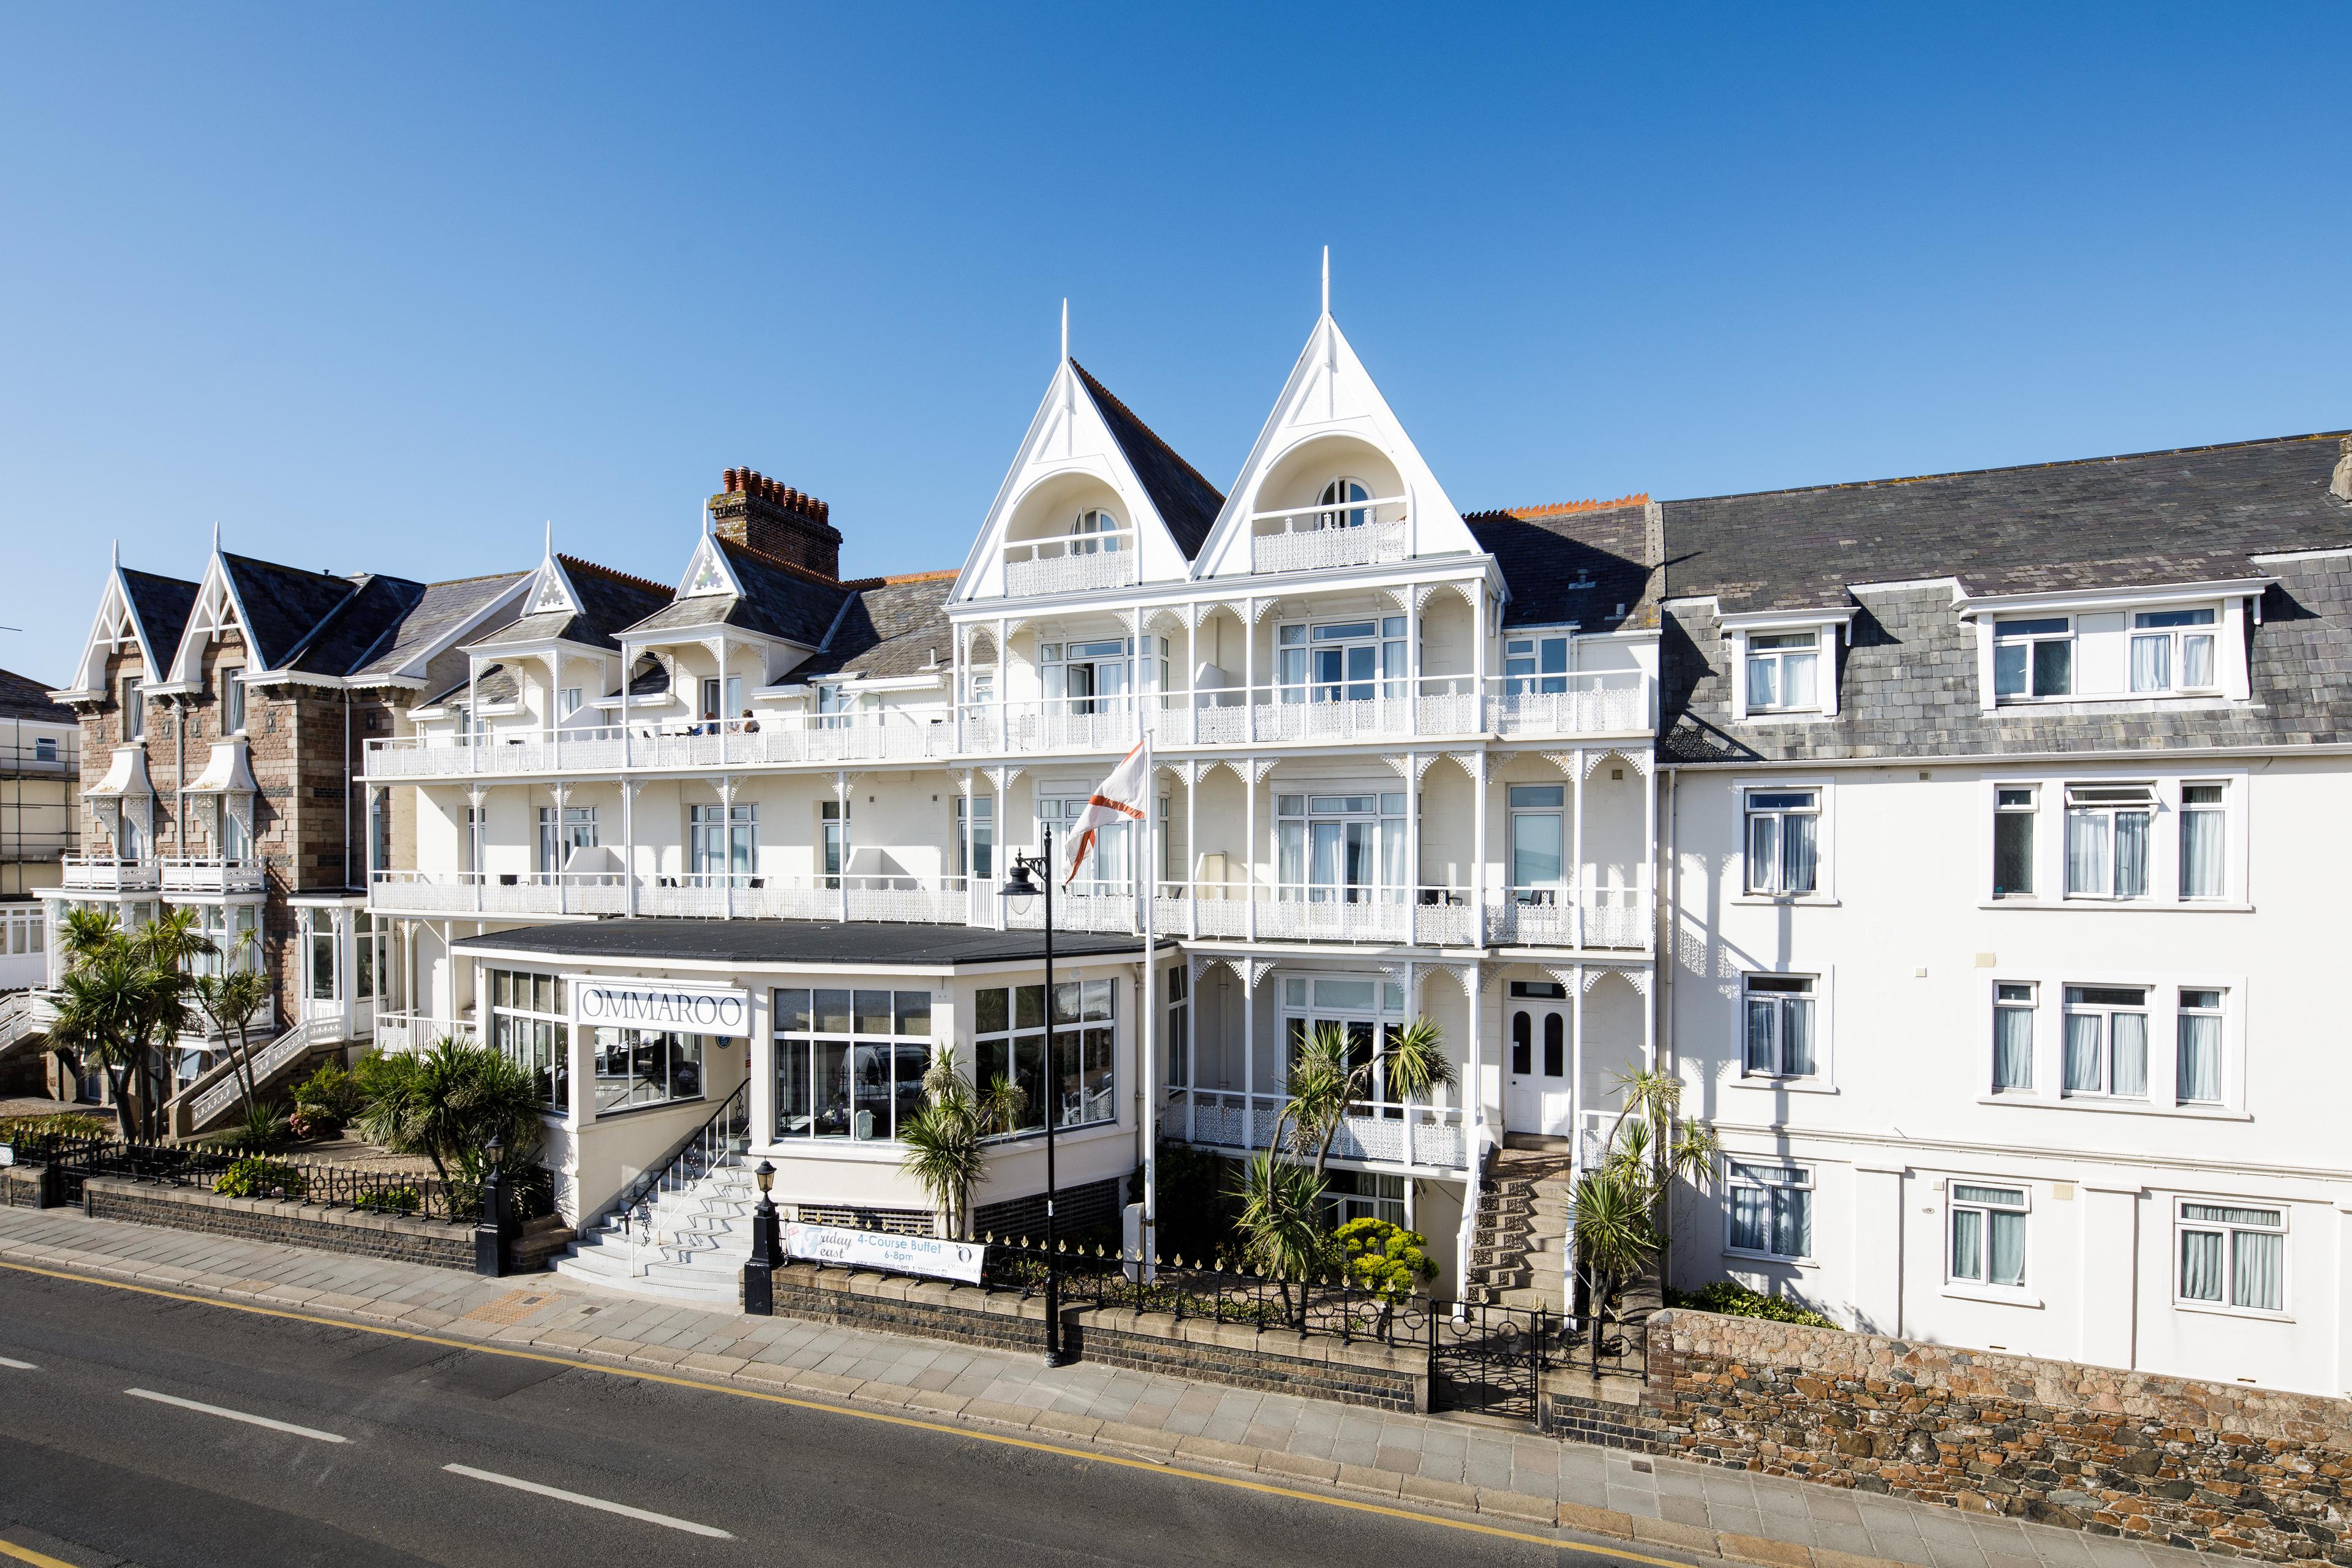 Ommaroo Hotel in Channel Islands, United Kingdom